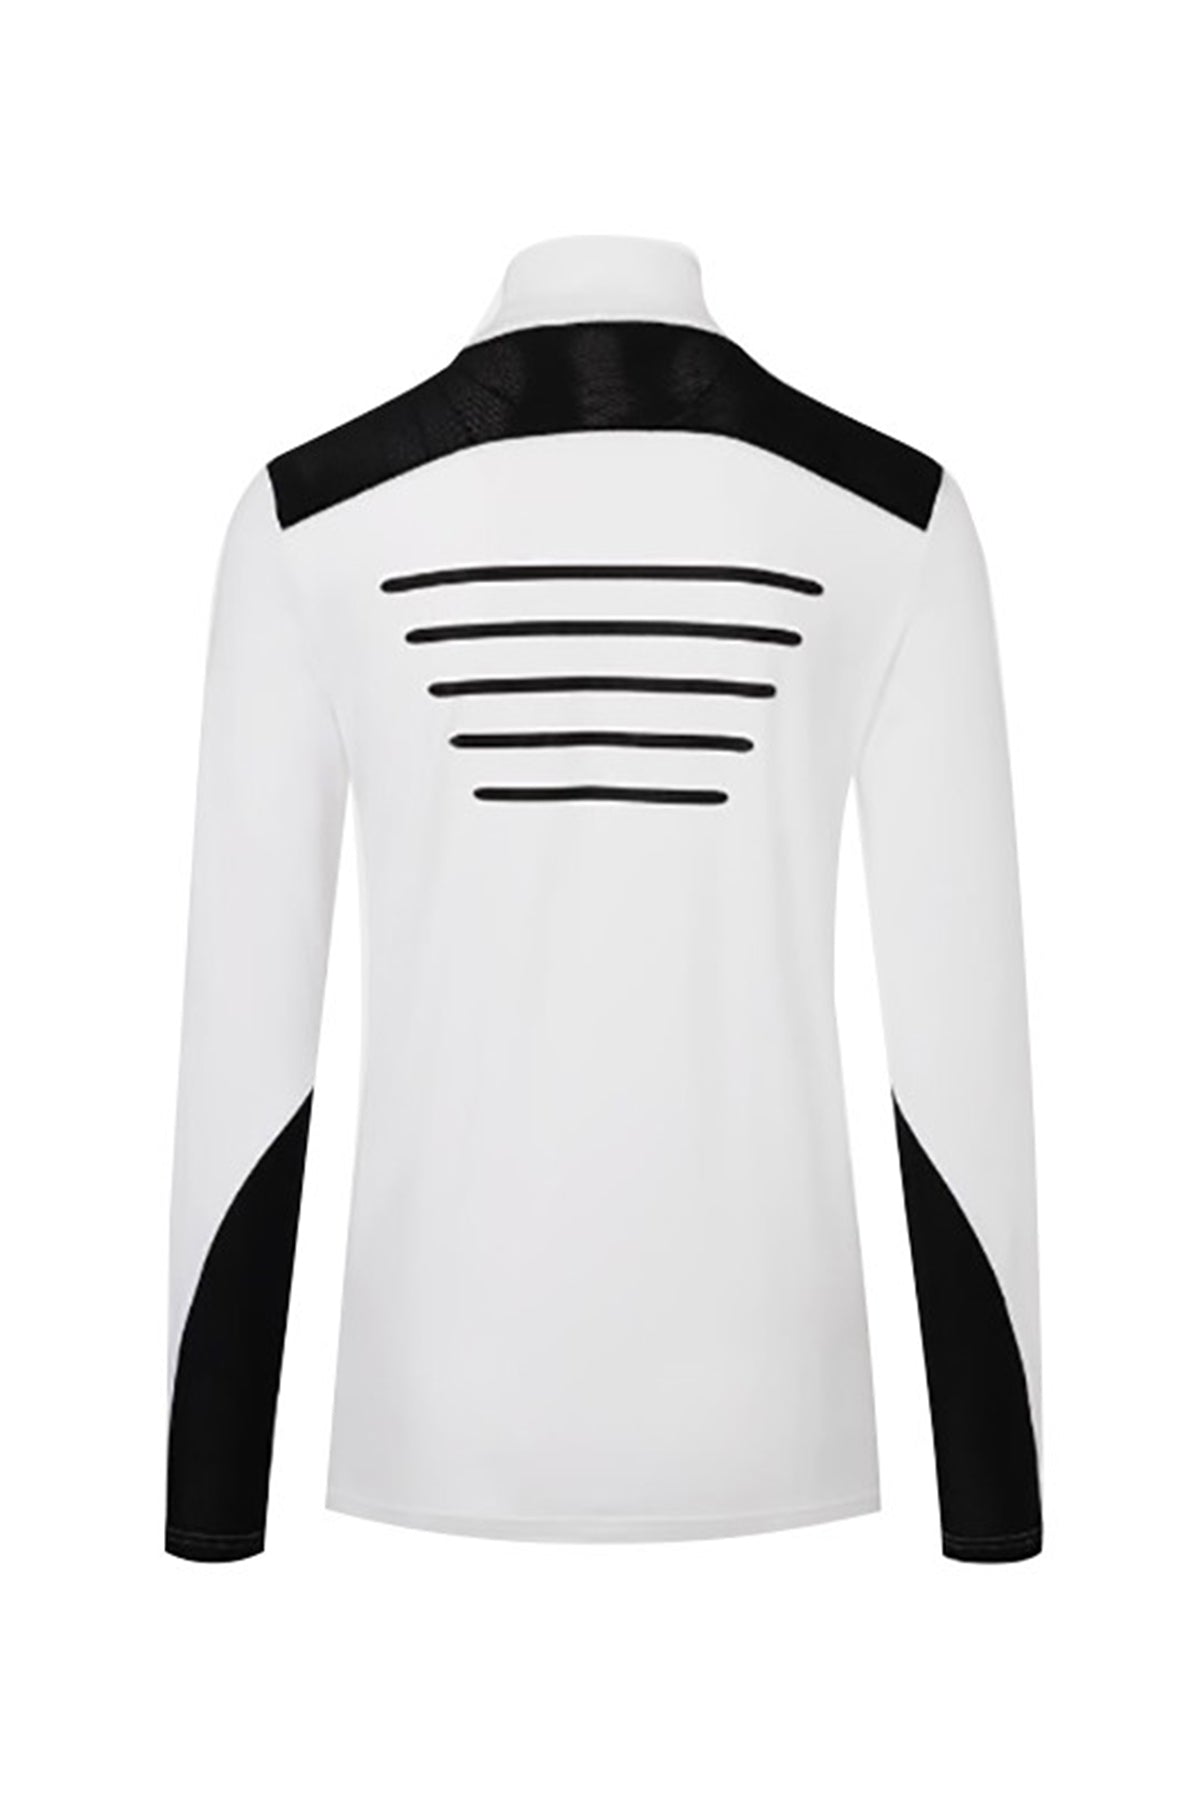 Bogner Sweatshirt-Libas Trendy Fashion Store